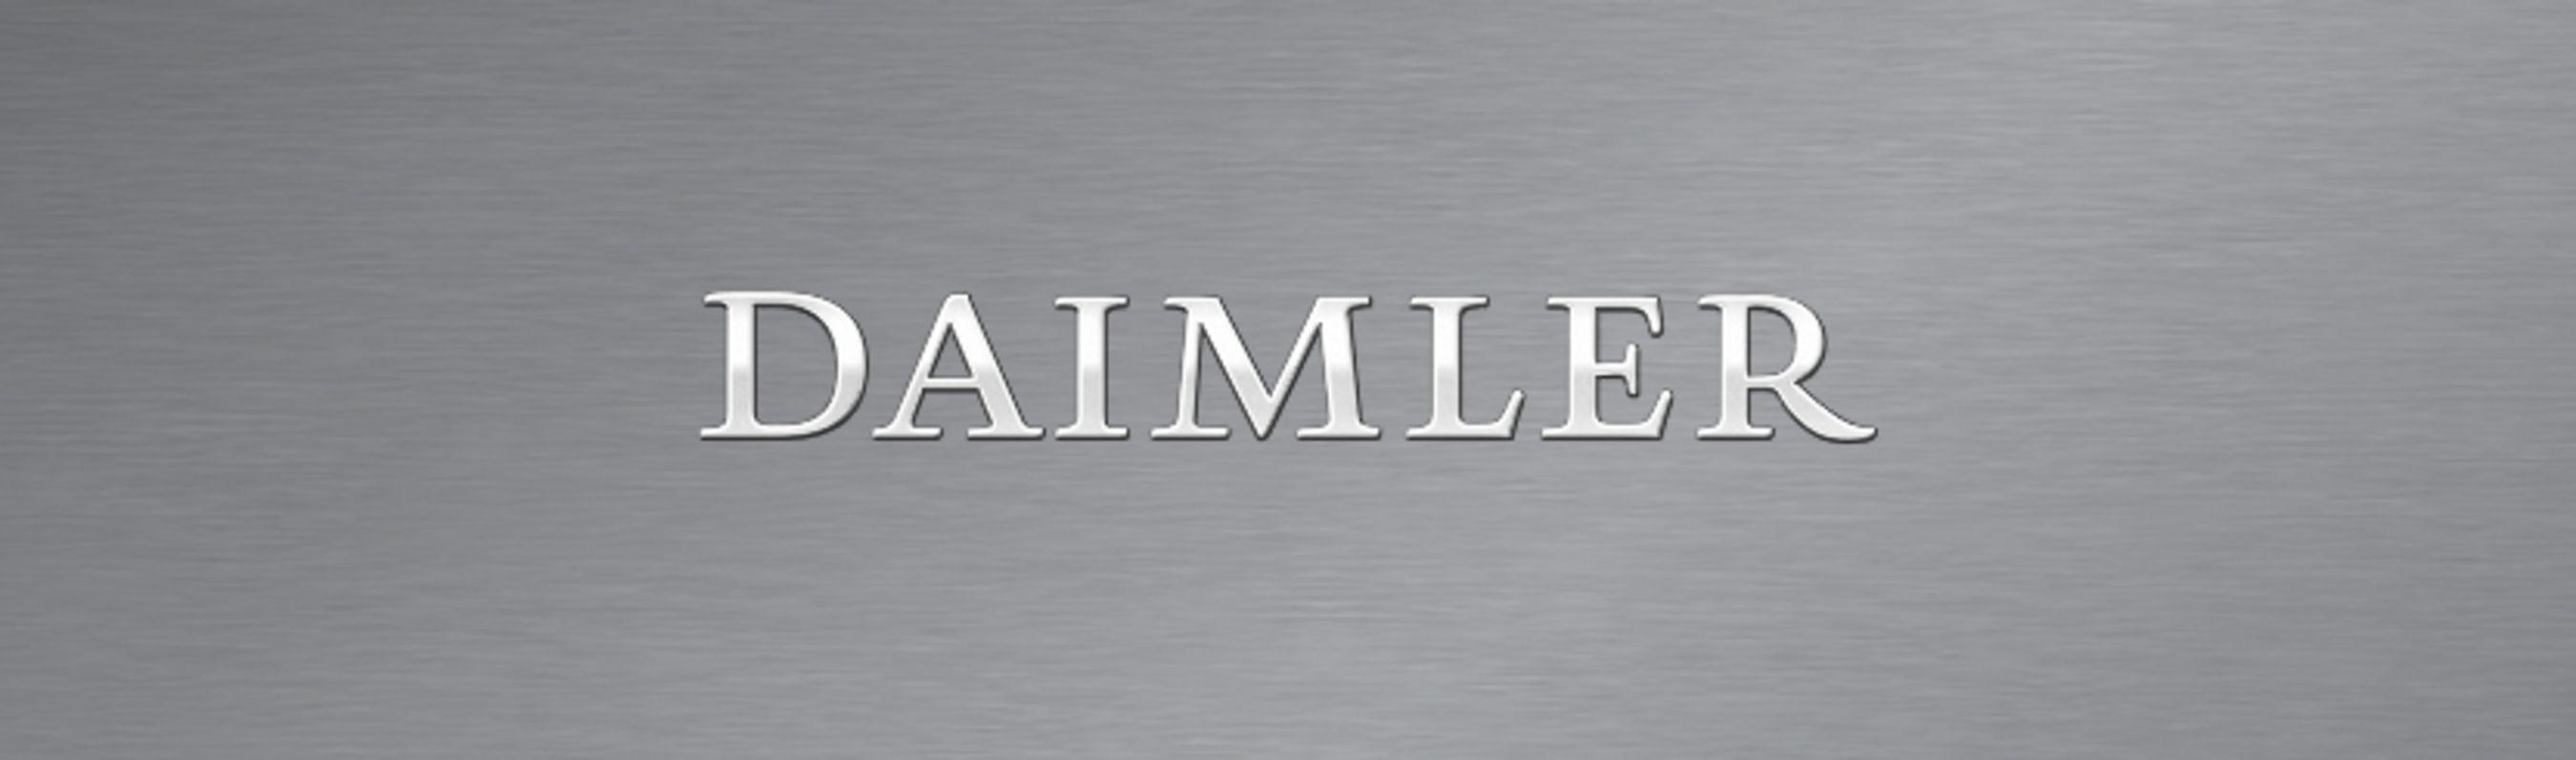 Daimler Trucks Logo - Daimler Trucks North America collaborates with AT&T and Microsoft ...